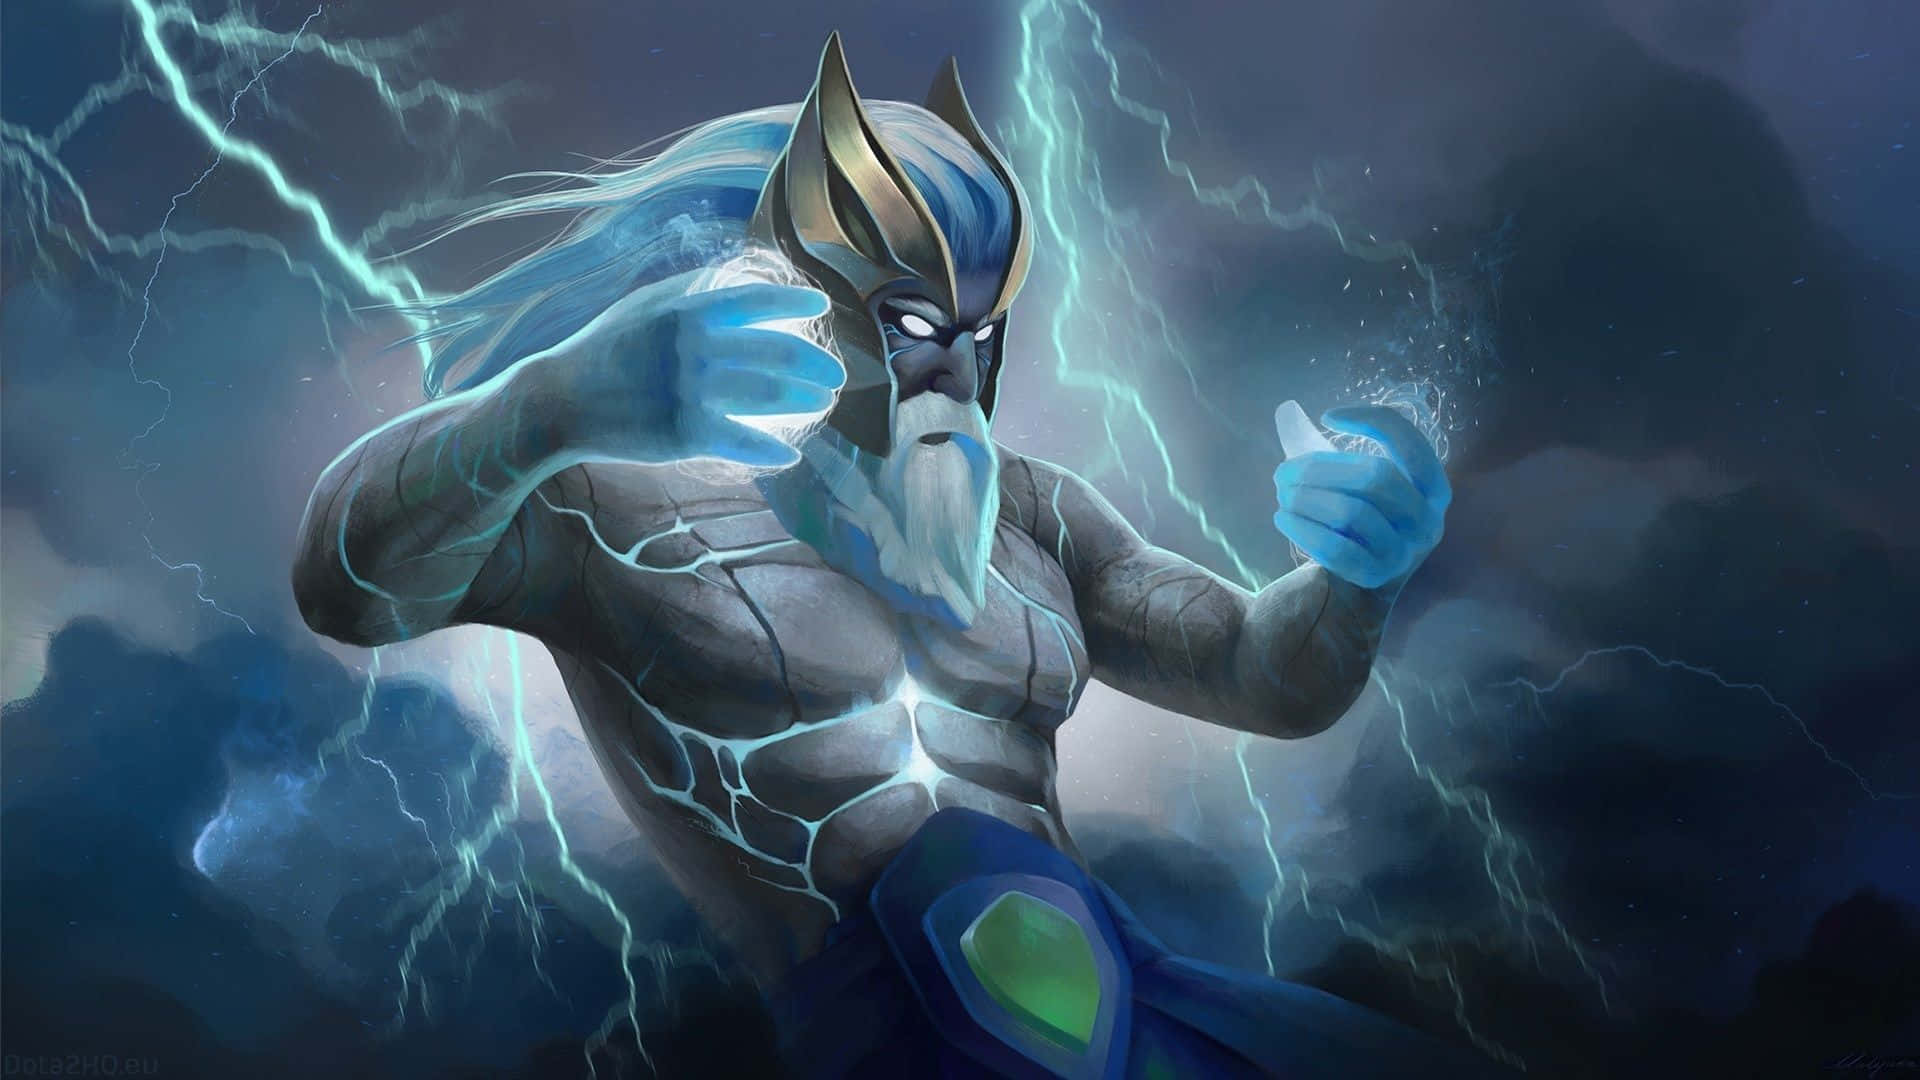 Mighty Zeus unleashes his power in Dota 2 Wallpaper